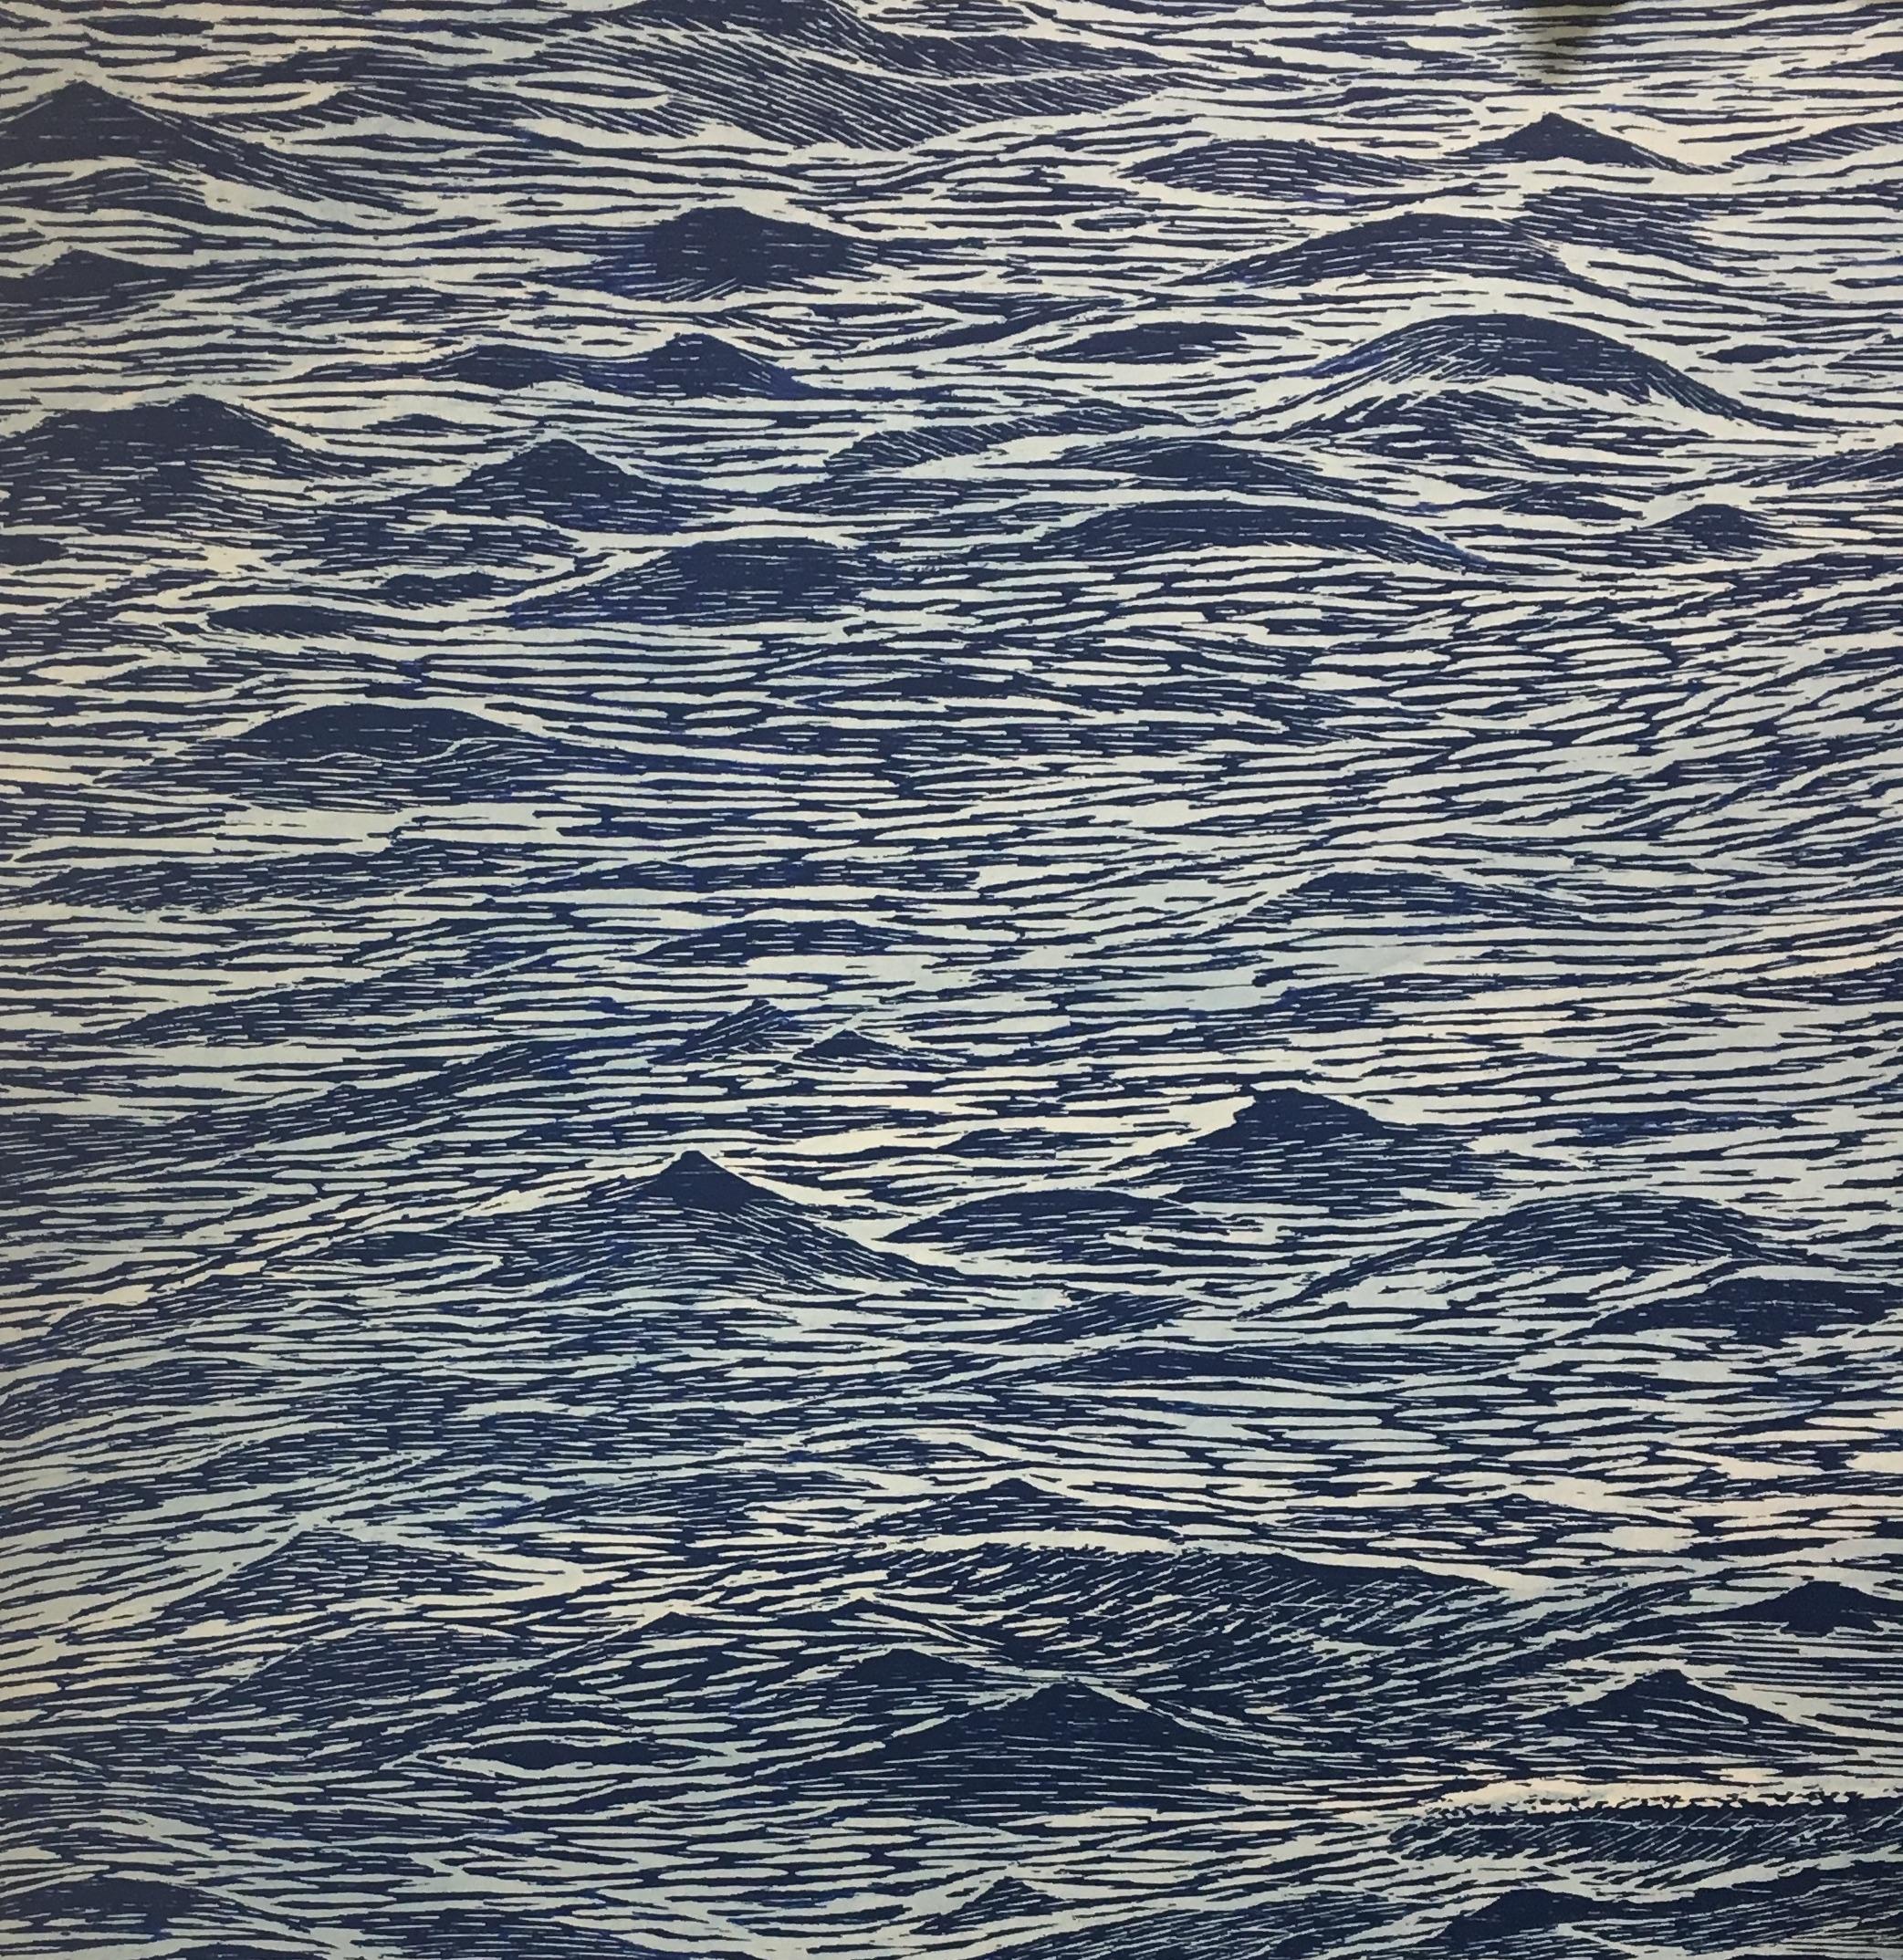 Seascape 24, Woodcut Print of Ocean Waves in Light Blue and Dark Cobalt, Navy 11